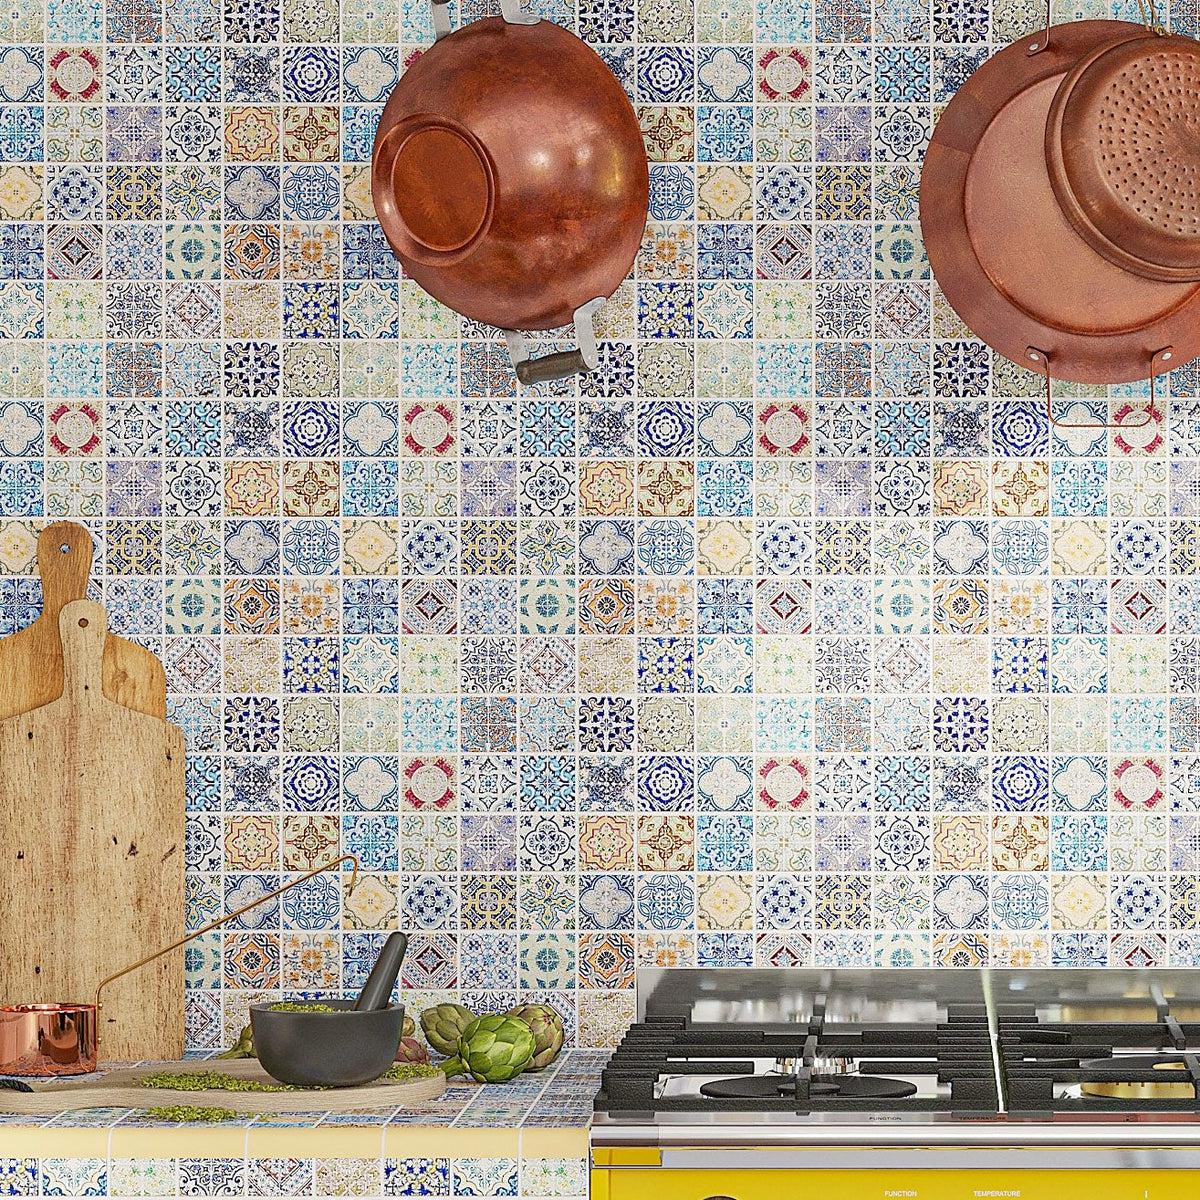 Spanish kitchen design with mosaic tile backsplash